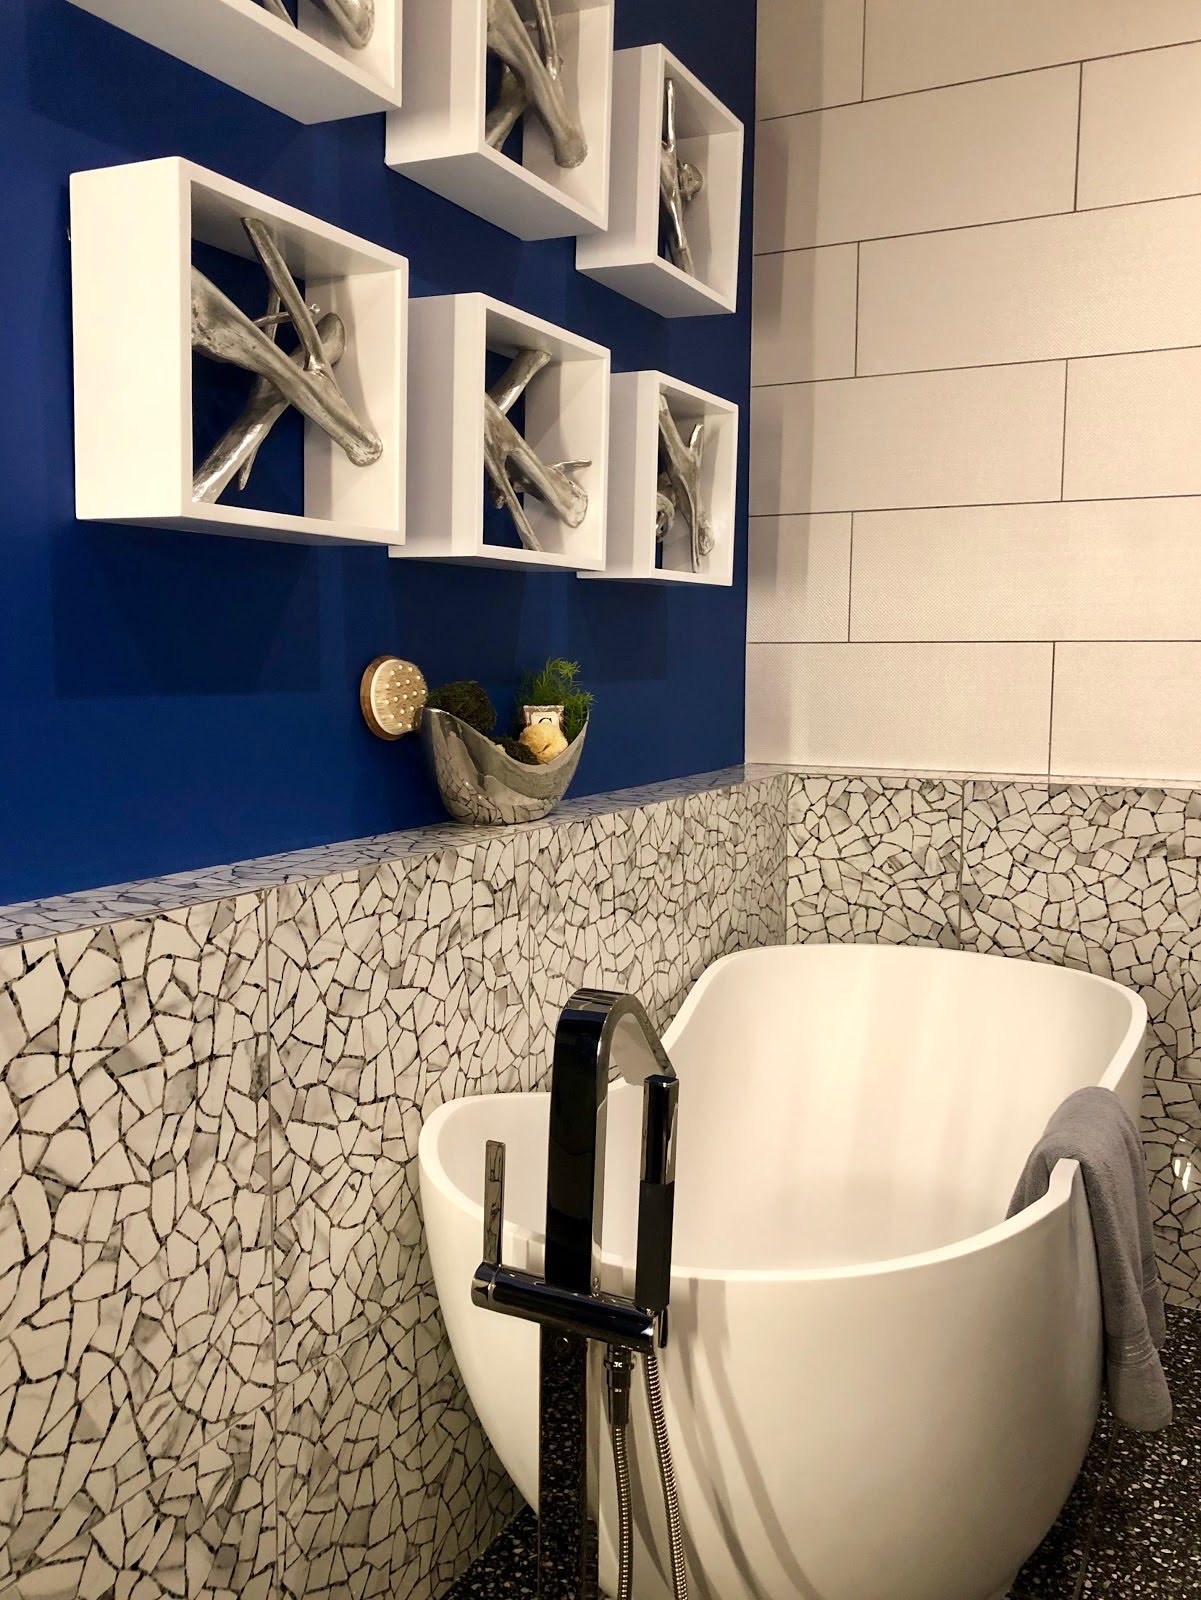 Quartz Bathroom - Blue Bathroom - KBIS 2019